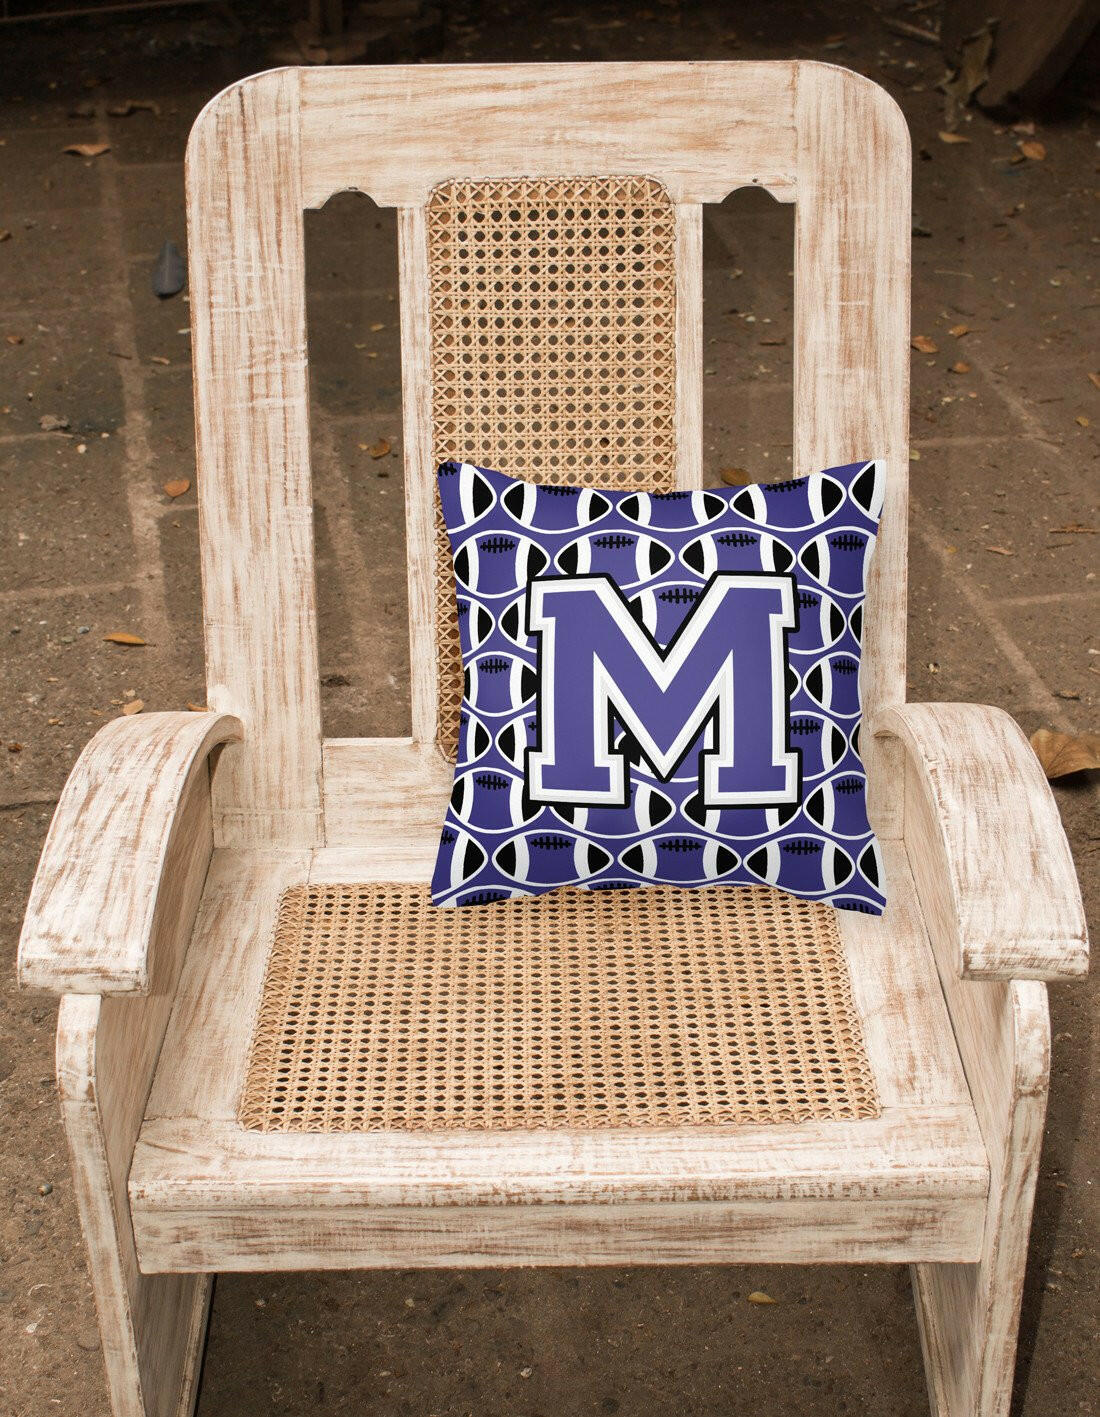 Letter M Football Purple and White Fabric Decorative Pillow CJ1068-MPW1414 by Caroline's Treasures